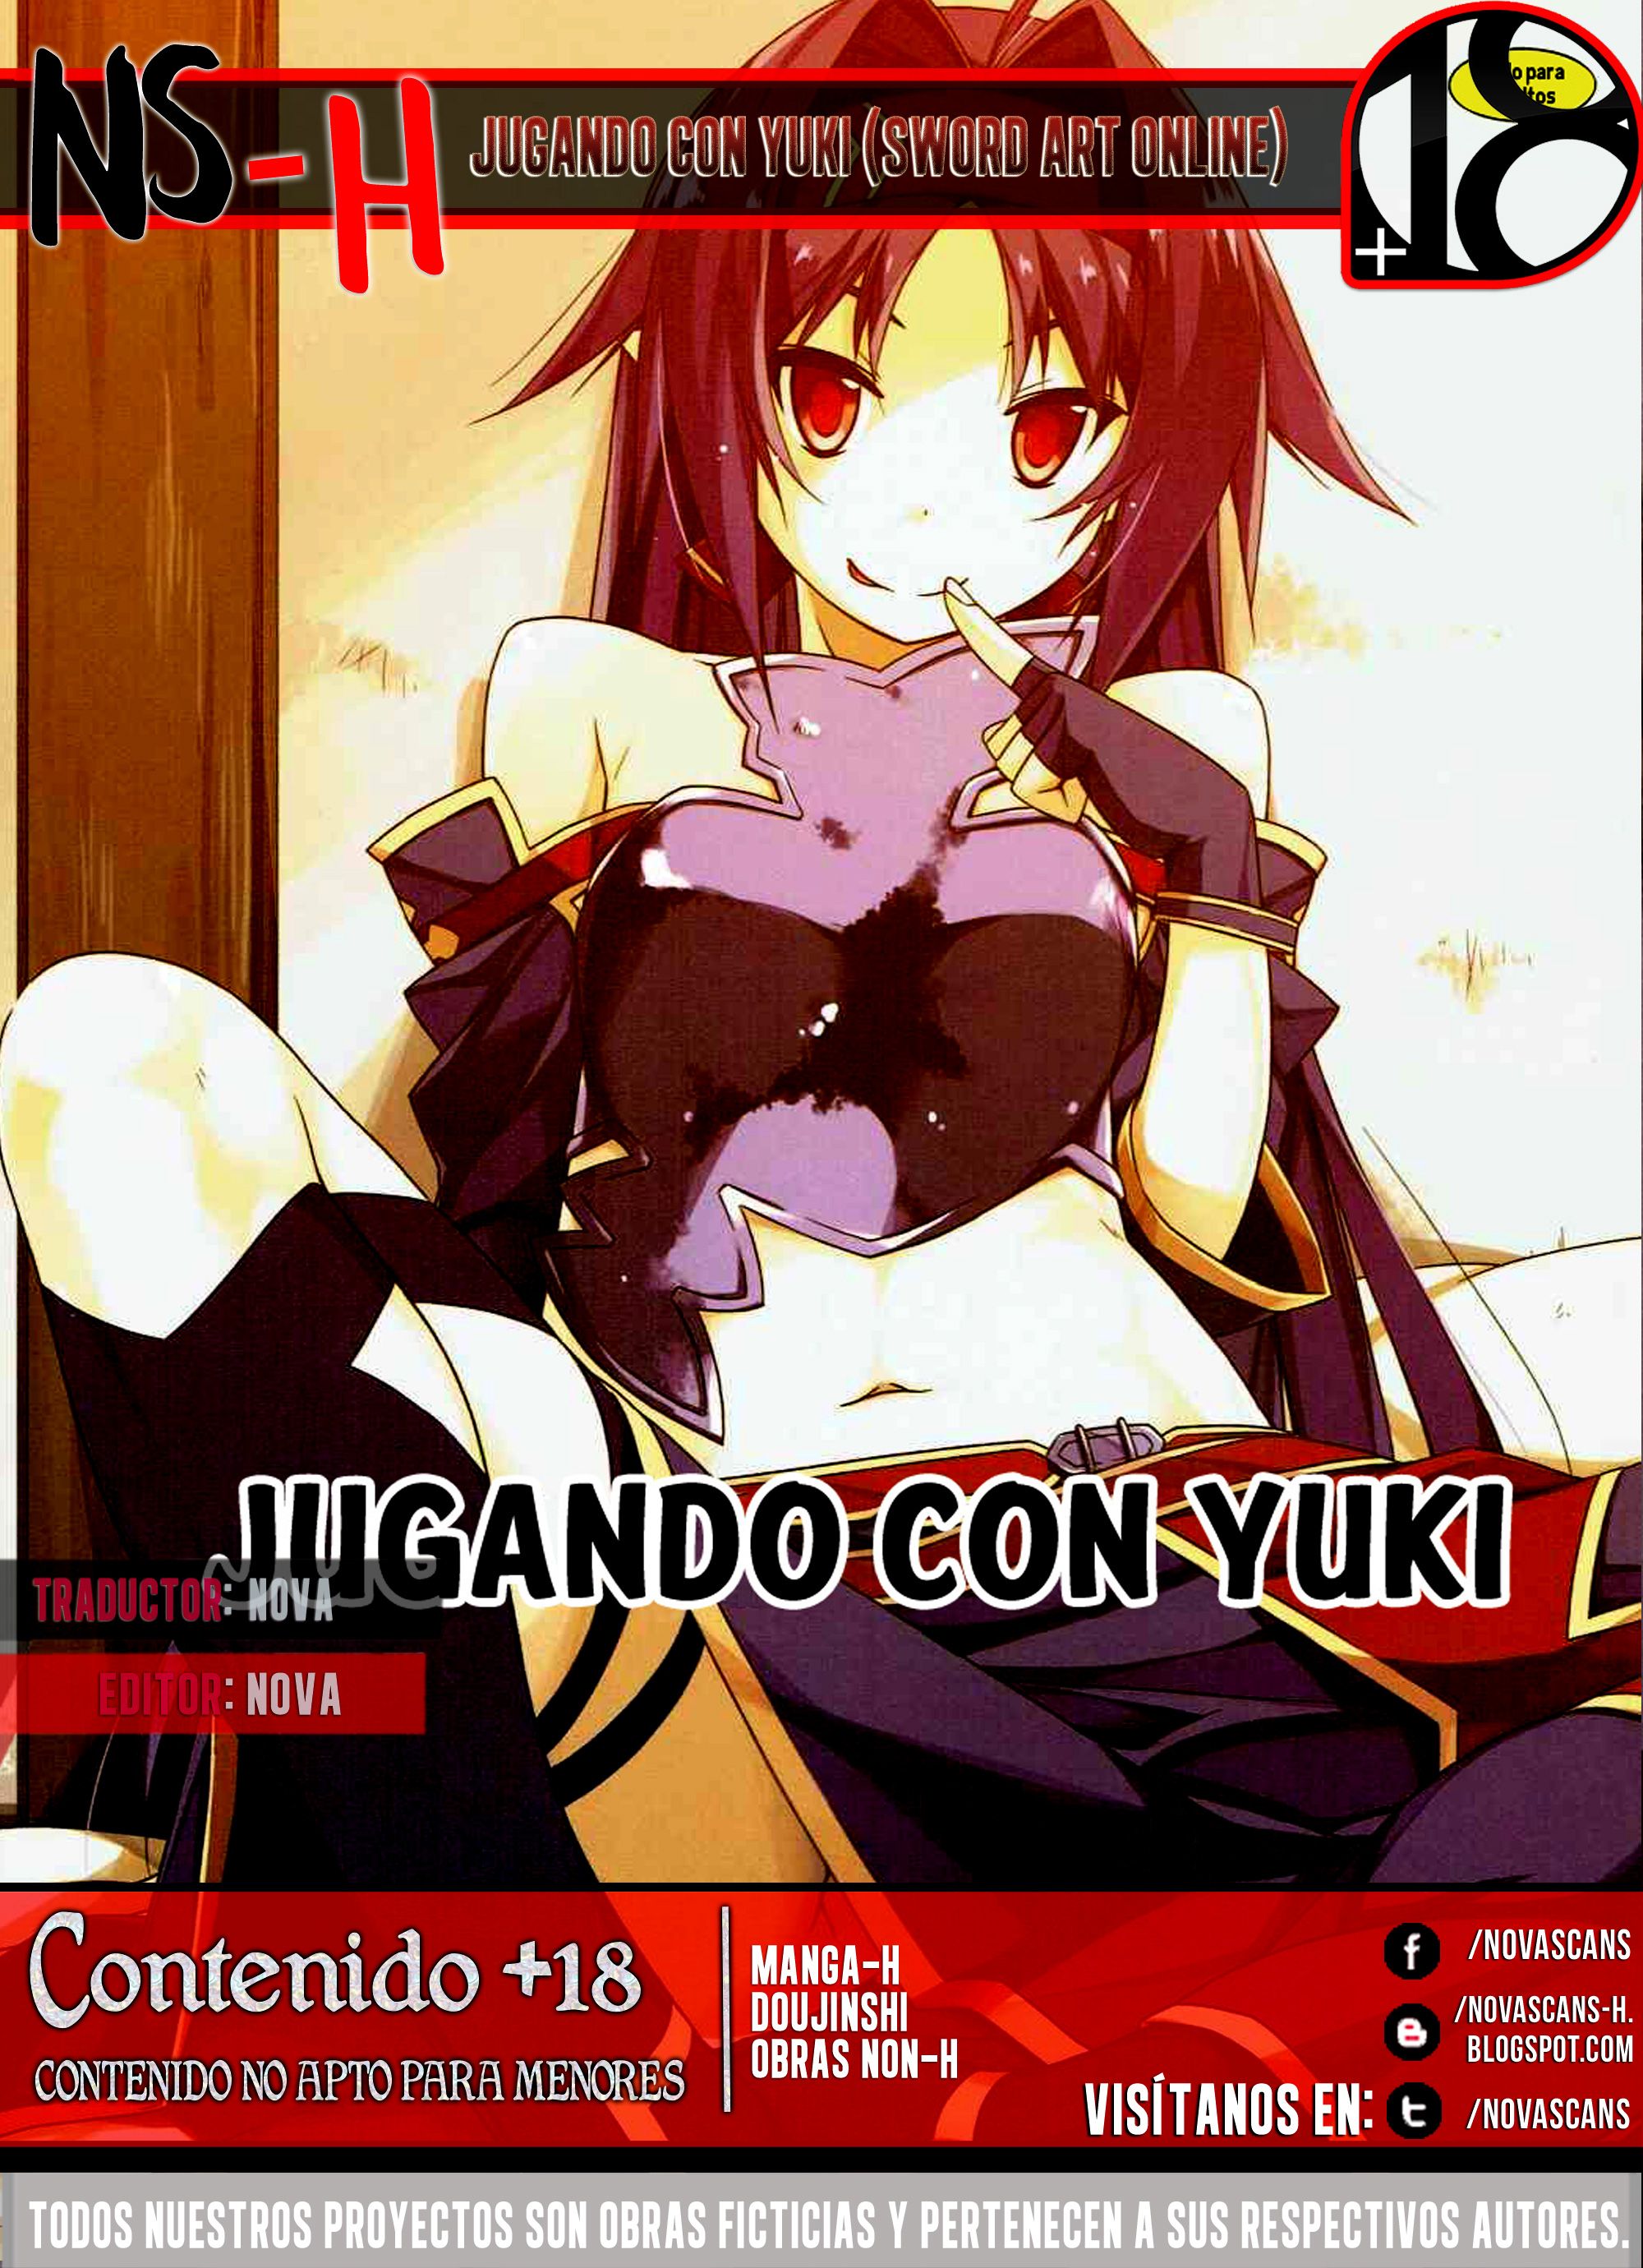 Jugando con Yuki (Sword Art Online) - 0